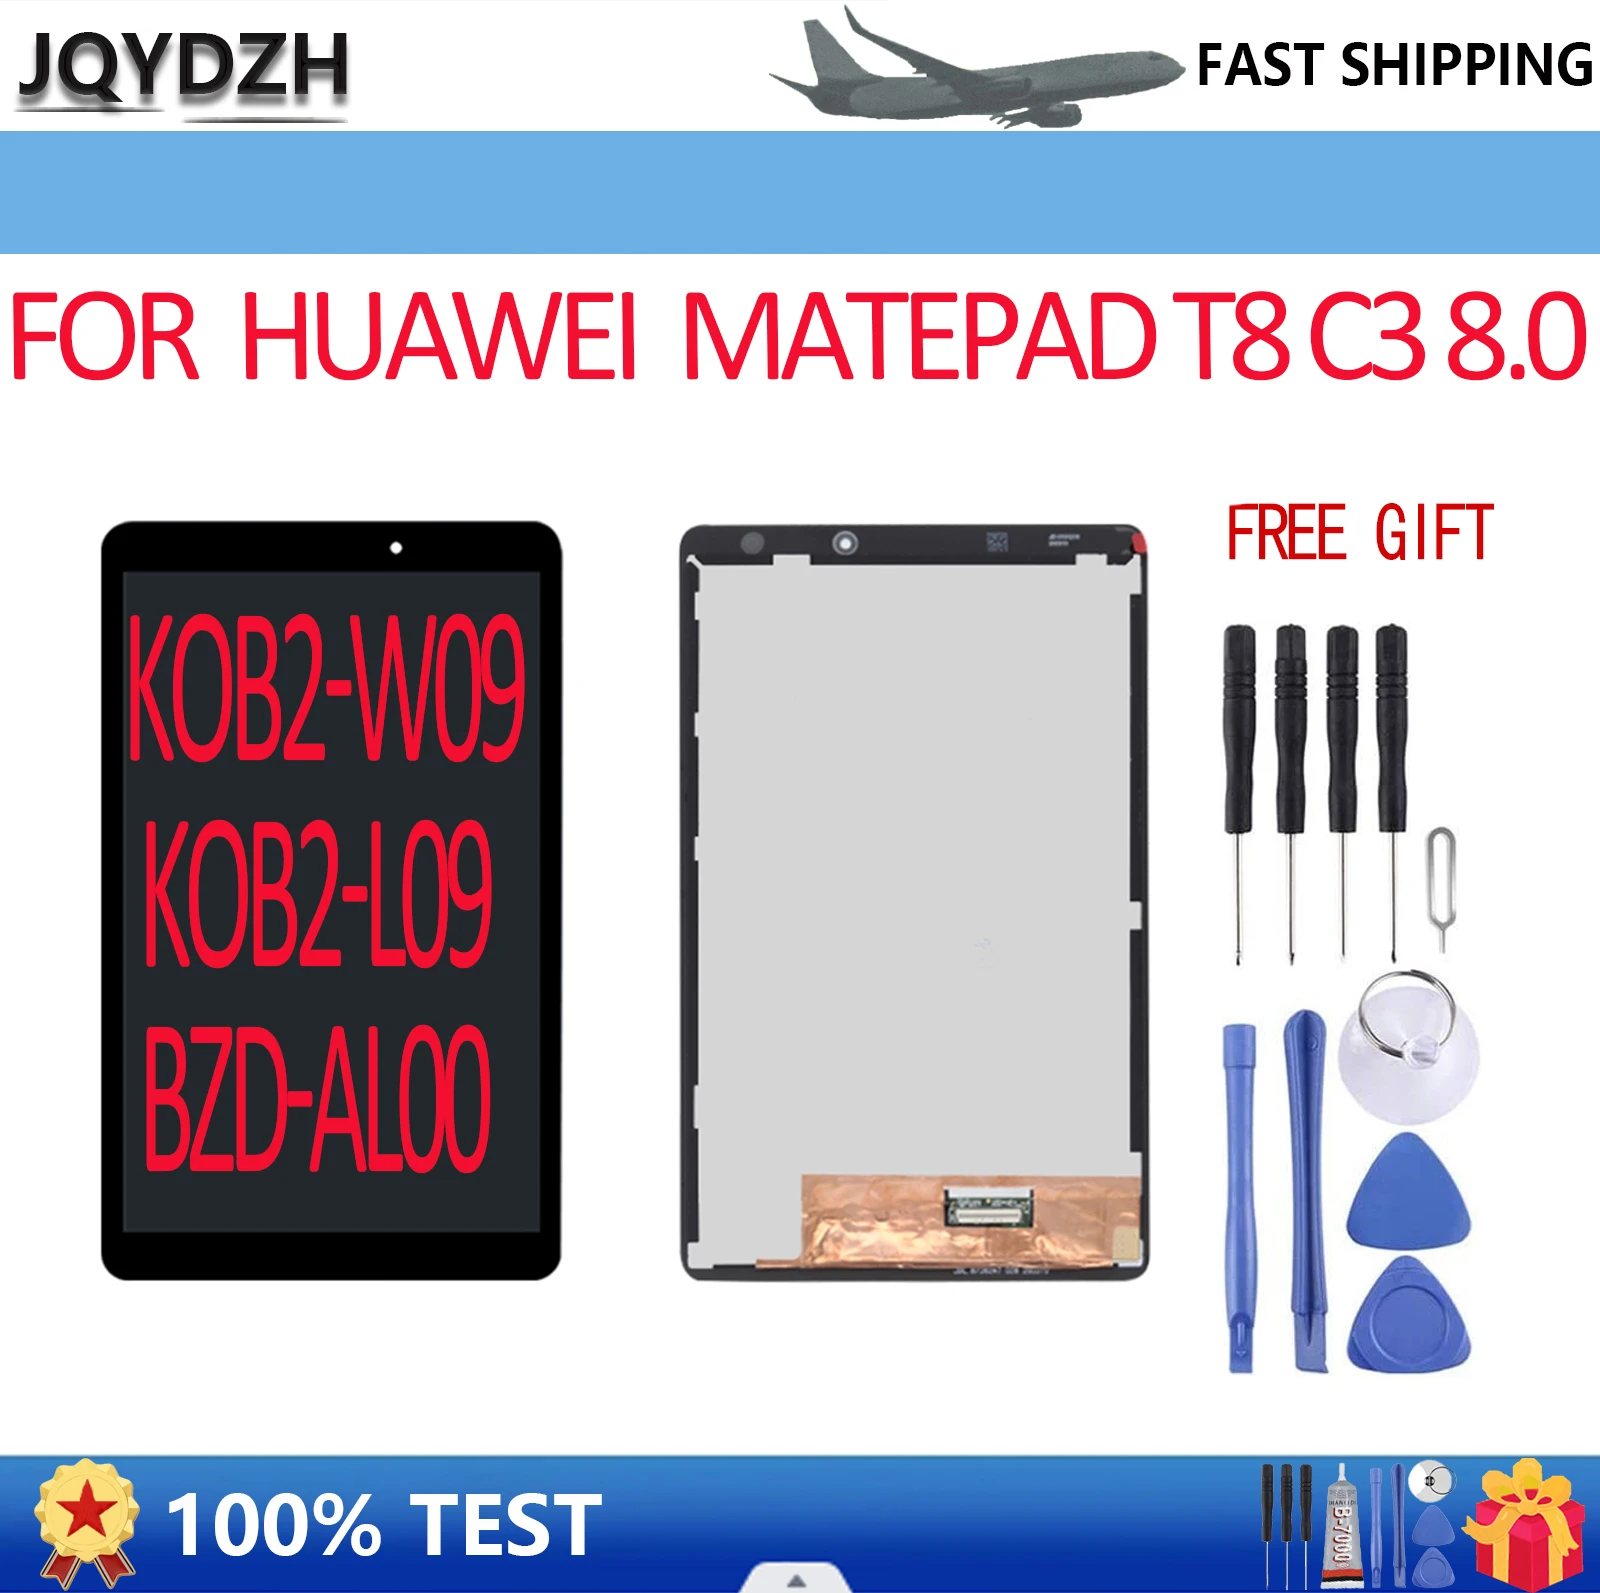 

JQYDZH for huawei MatePad T8 C3 8.0 KOB2-W09 KOB2-L09 BZD-AL00 Touch screen Digitizer LCD Display LCD Assembly Glass 100% test